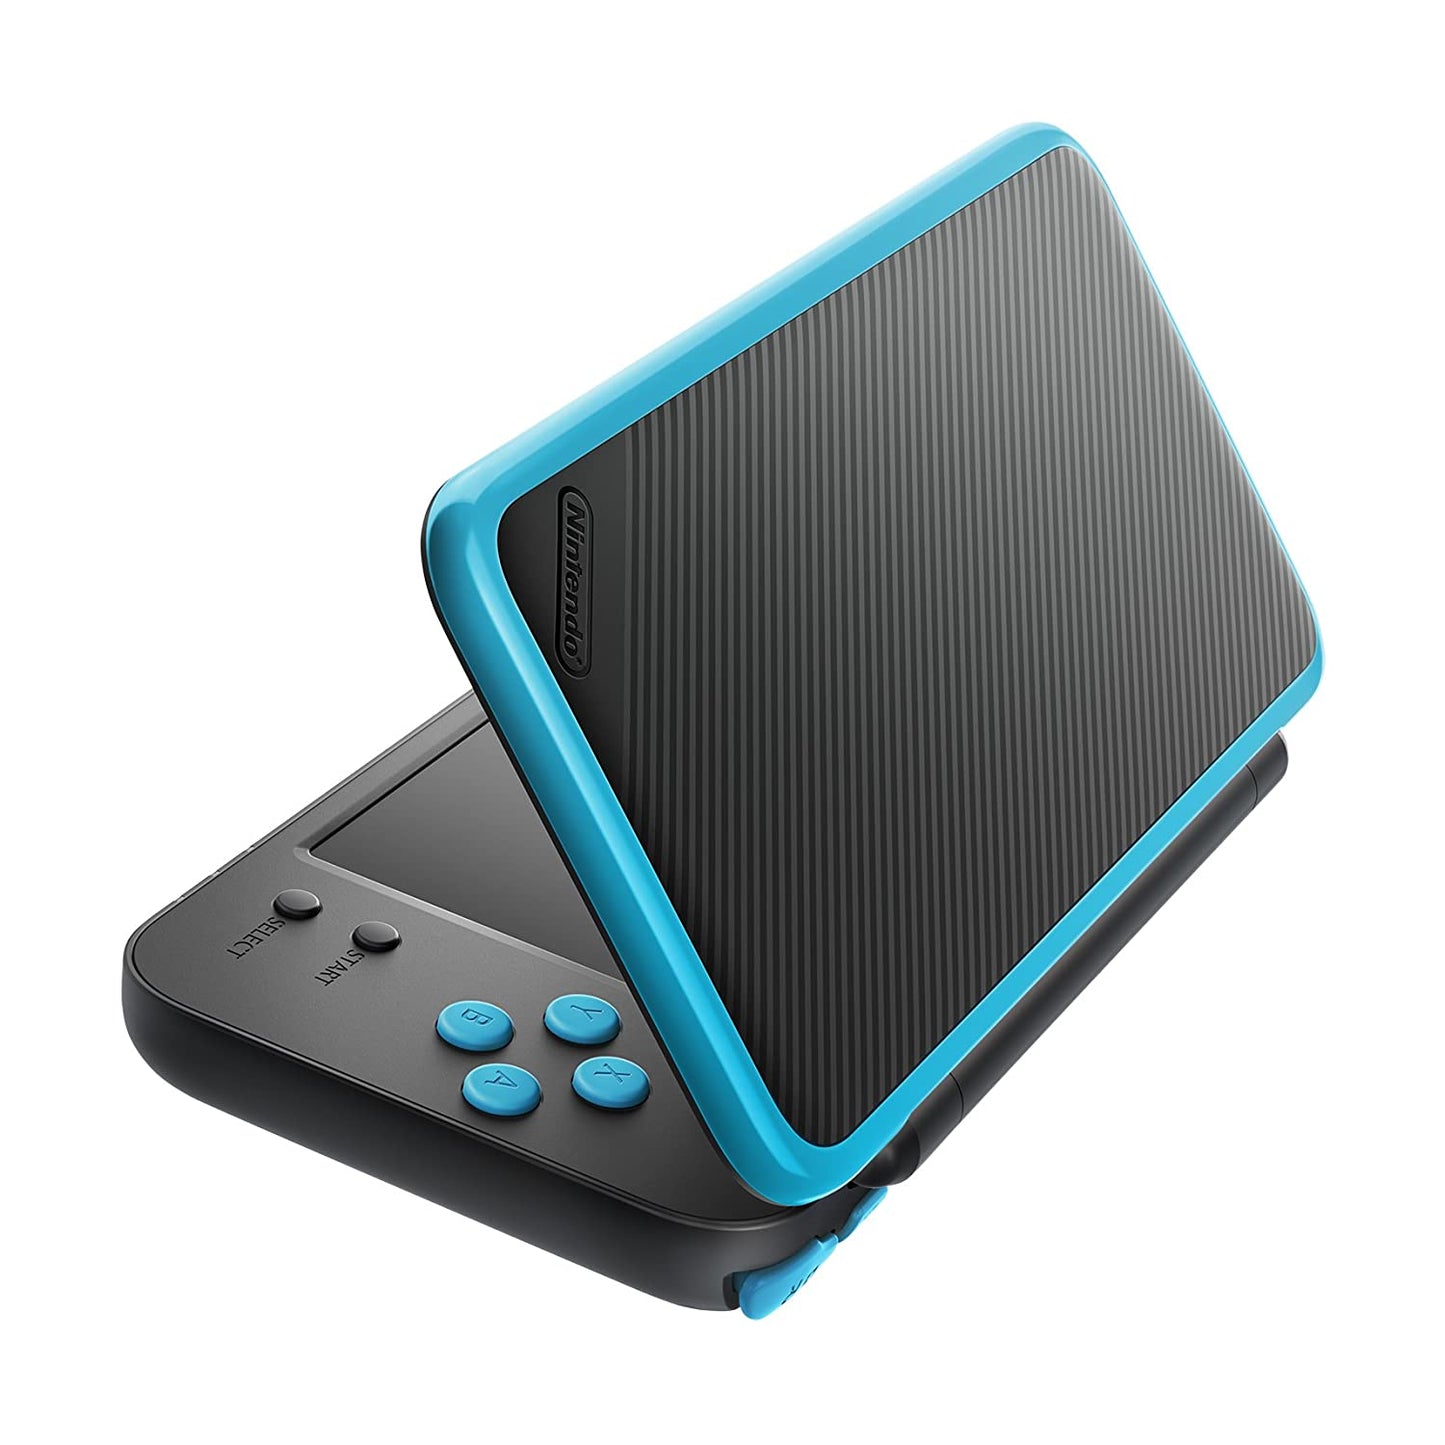 New Nintendo 2DS XL Black + Turquoise (Nintendo 3DS)